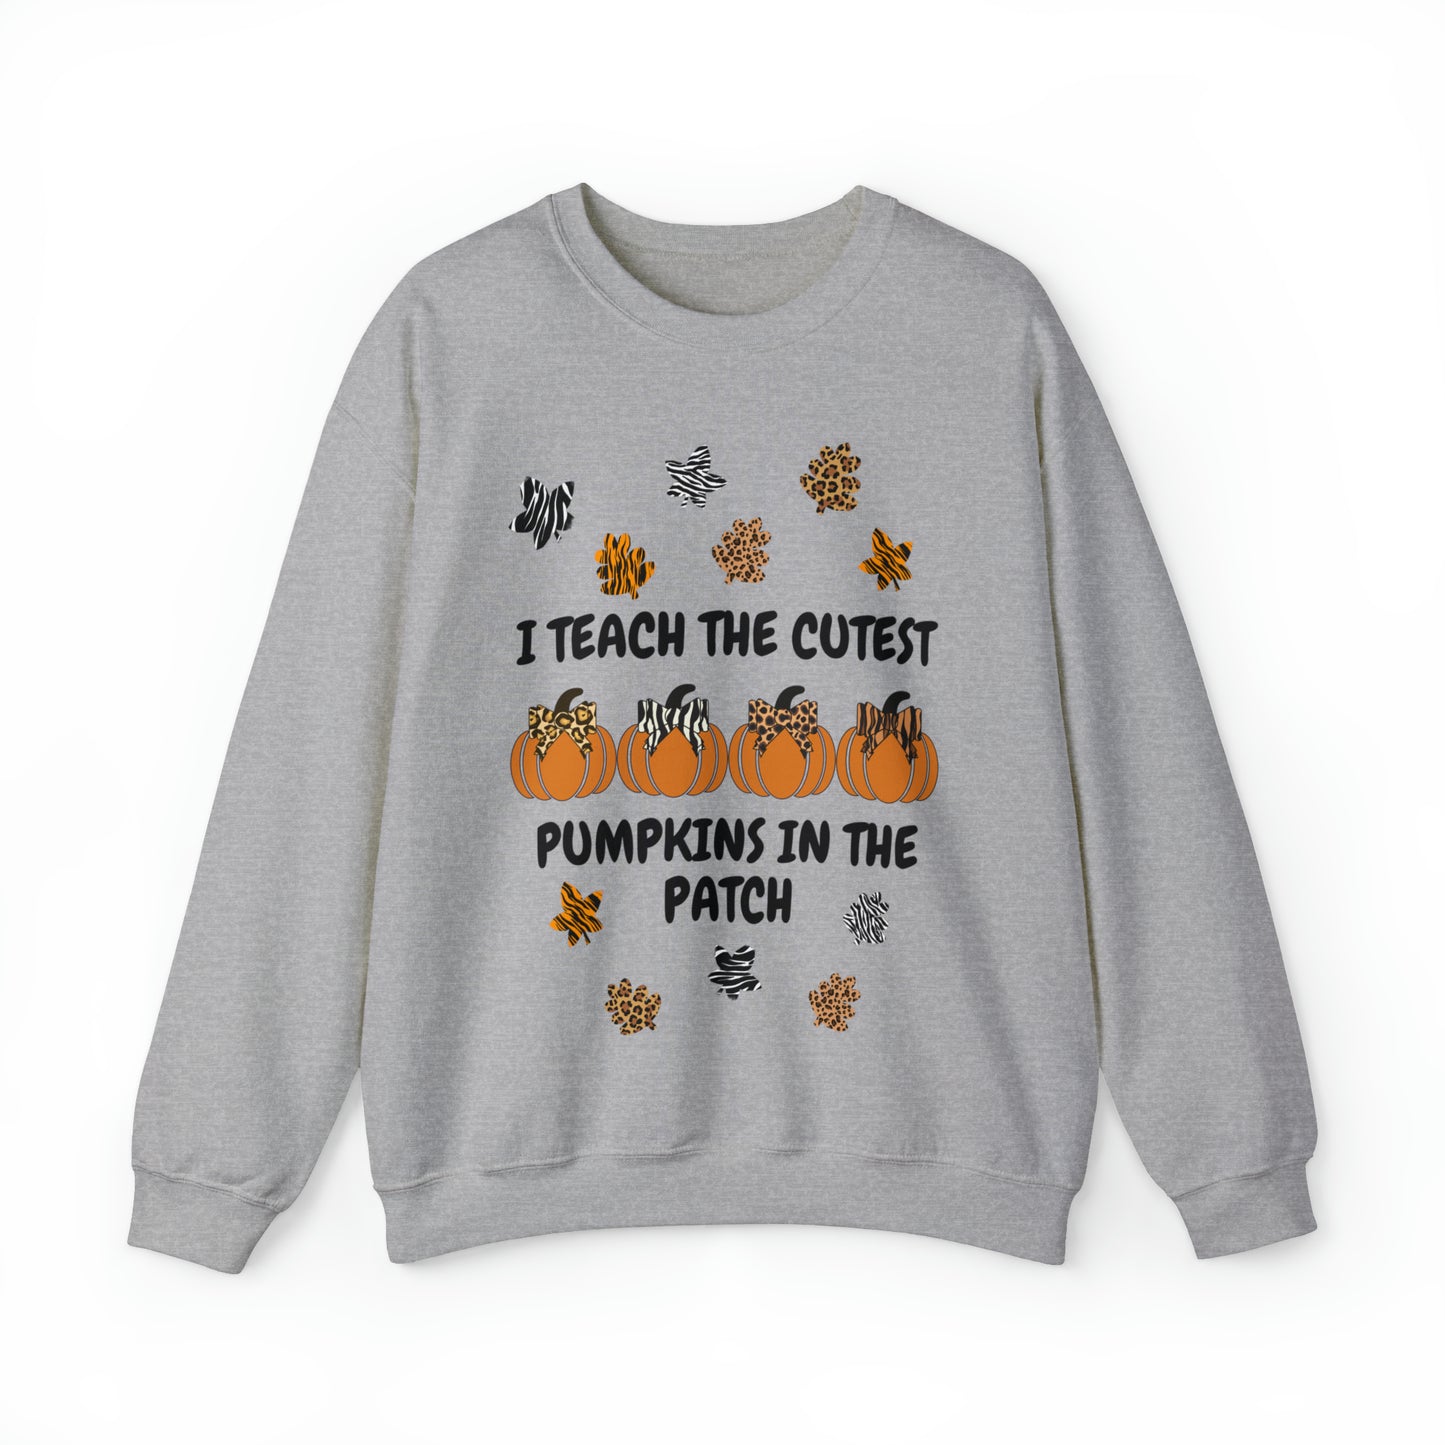 I Teach the Cutest Pumkins in the Patch Crewneck Sweatshirt